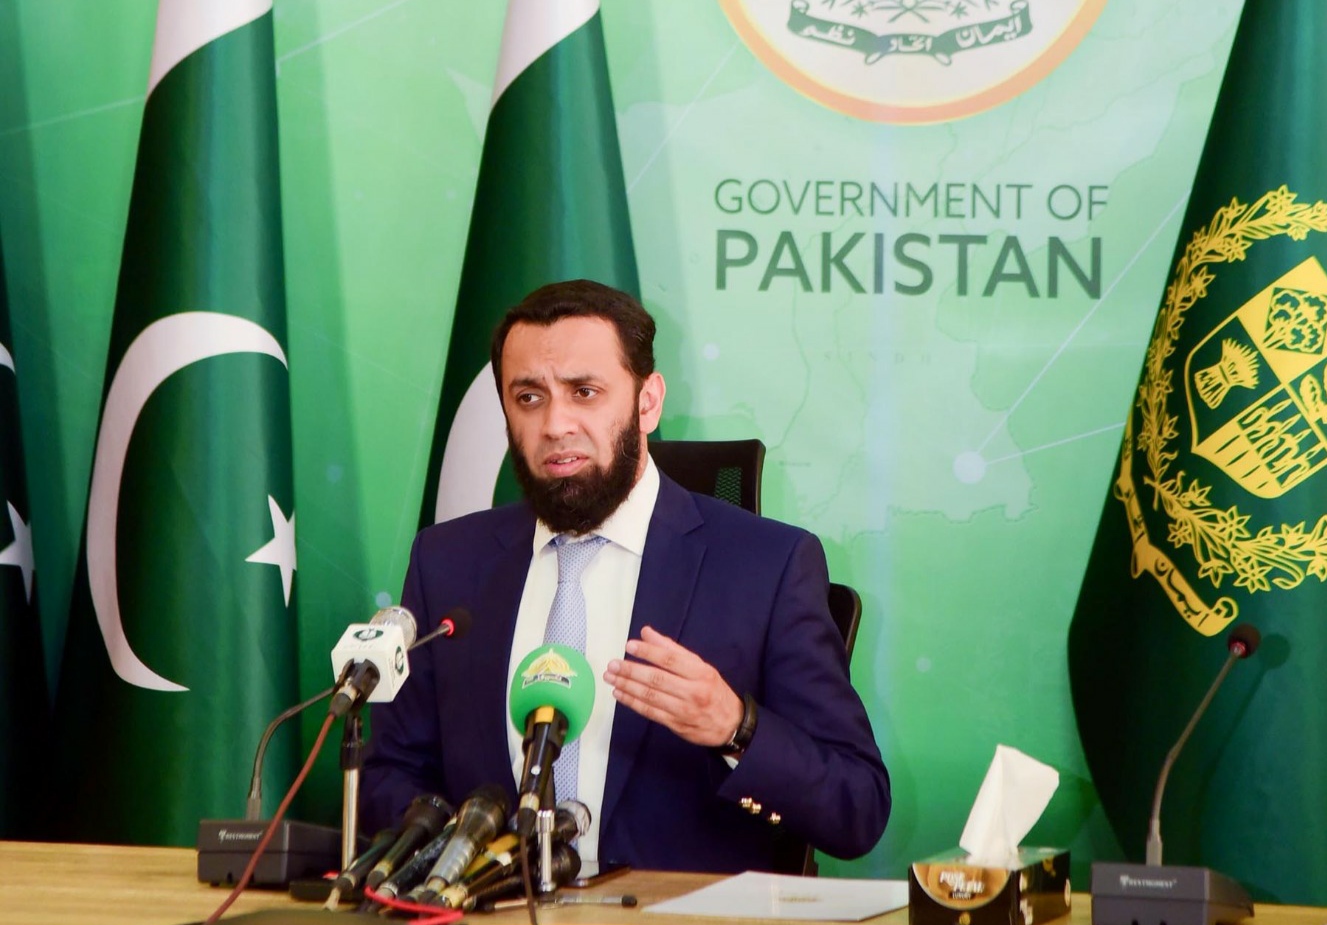 Pakistan’s enemies perturbed over its rapid progress under PM Shehbaz: Tarar